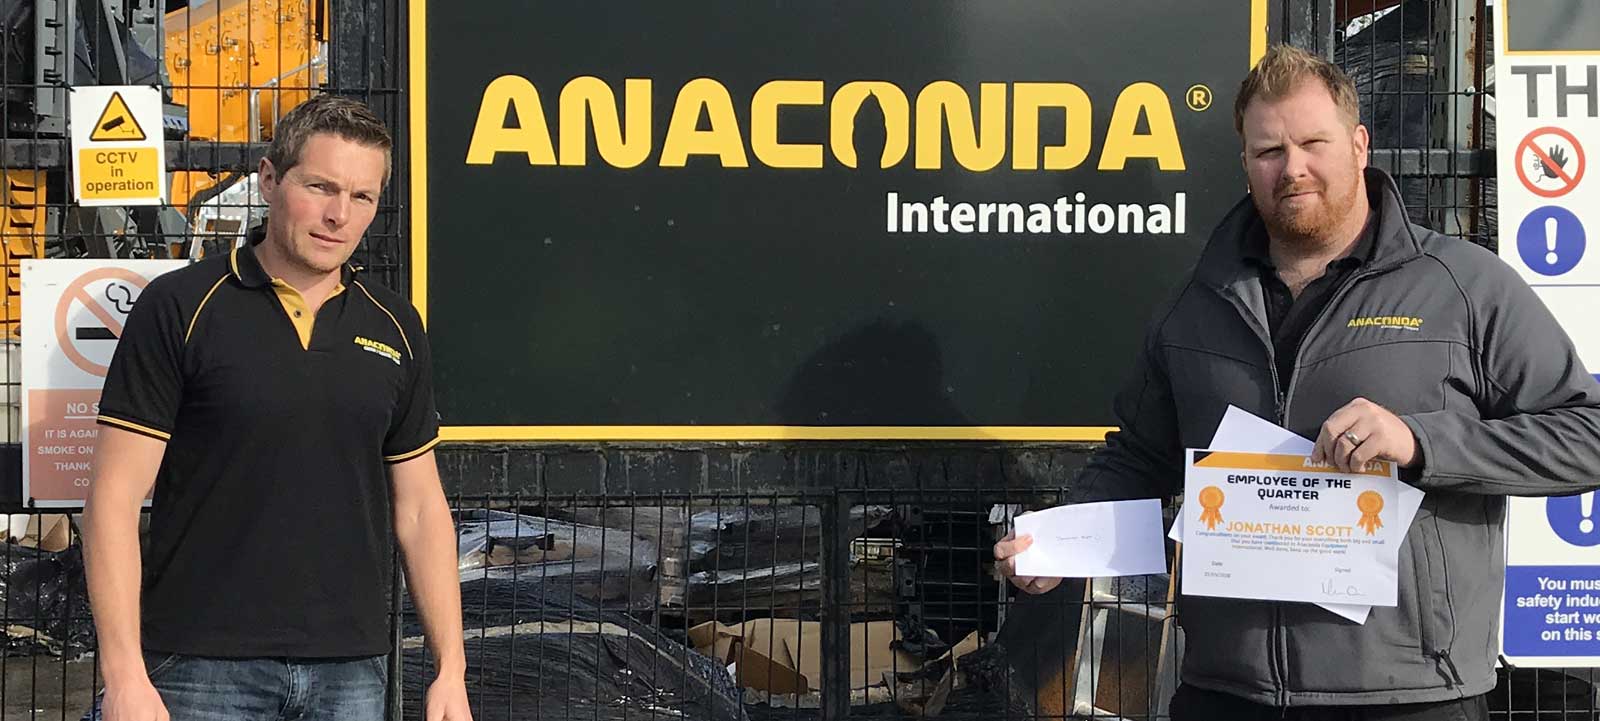 Anaconda introduce their all new crushing equipment range